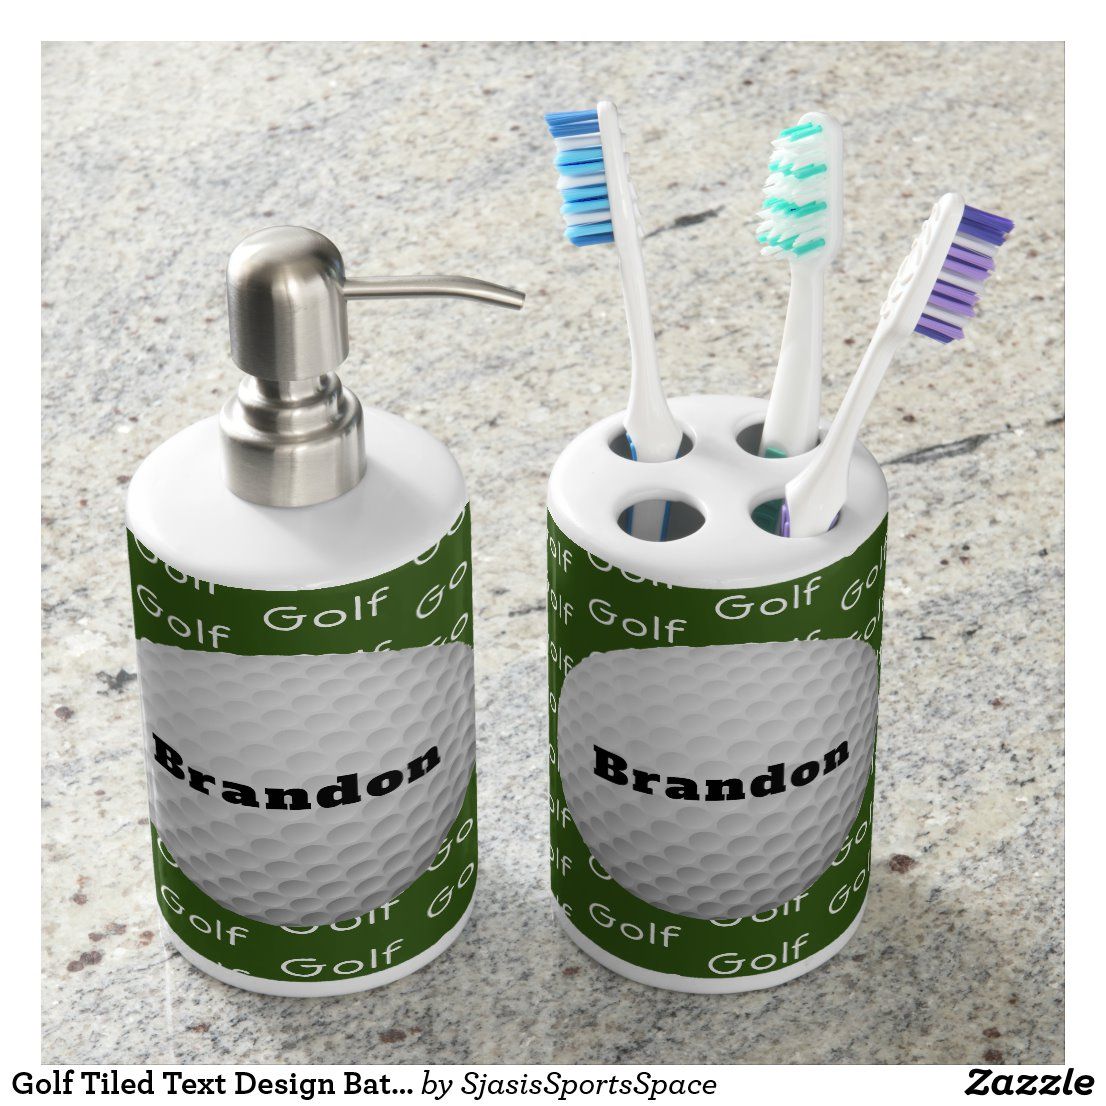 Golf Tiled Text Design Bathroom Accessories Bath Set